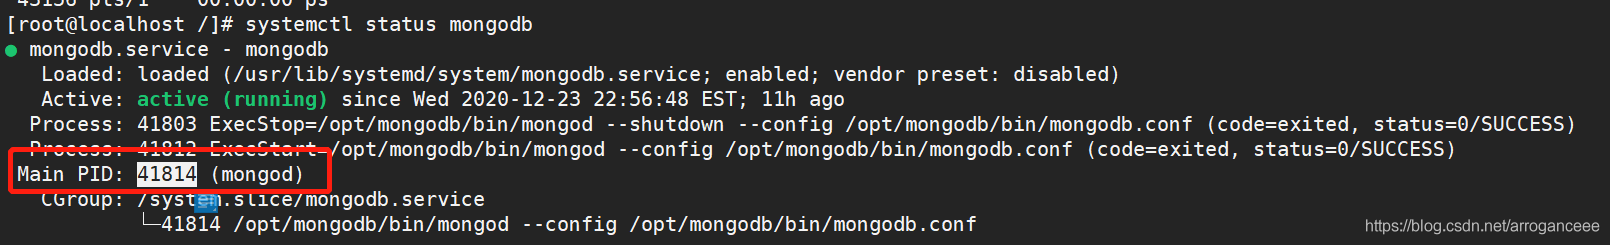 Mongodb 崩溃报错 Too many open files的问题解析